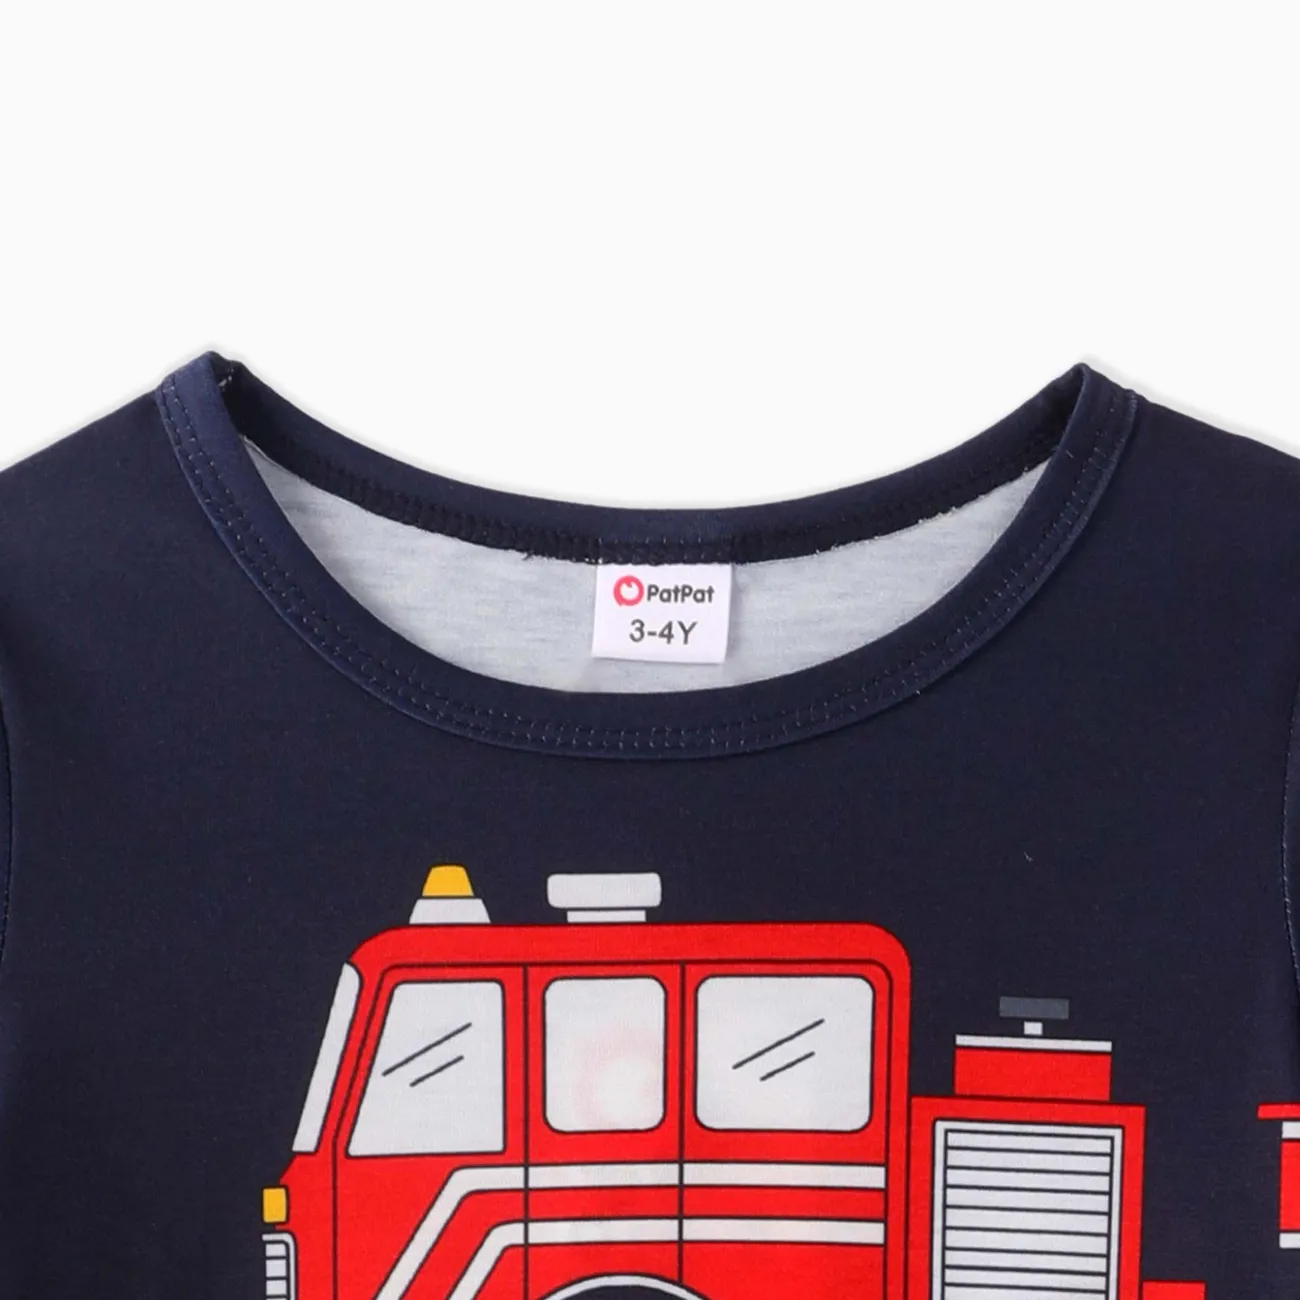 Toddler Boy Vehicle Print Short-sleeve Tee royalblue big image 1